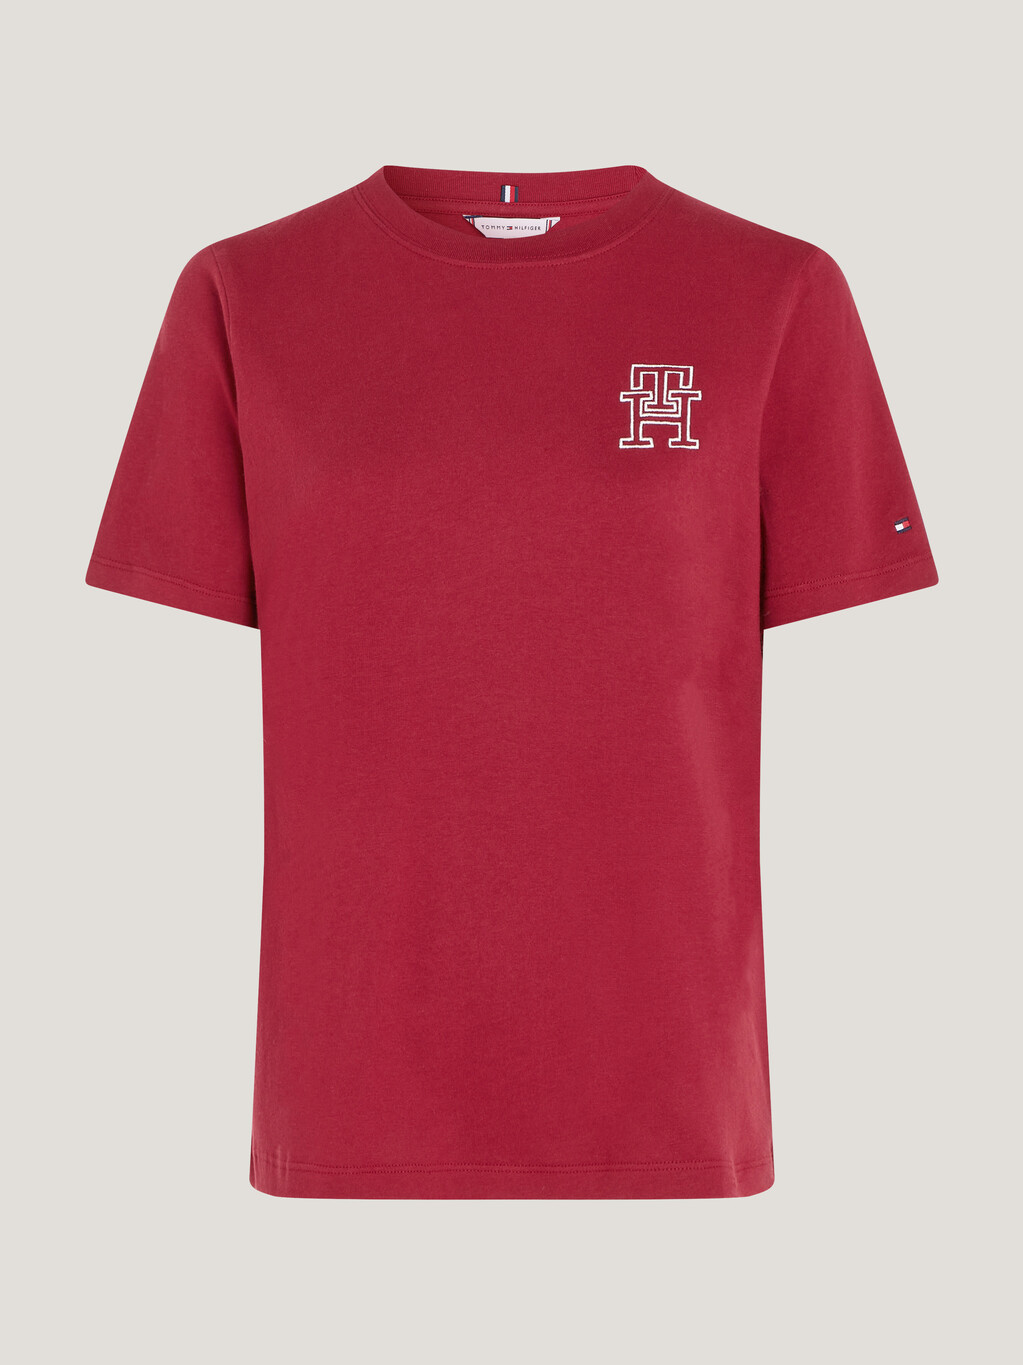 TH Modern Monogram T-Shirt, Rouge, hi-res